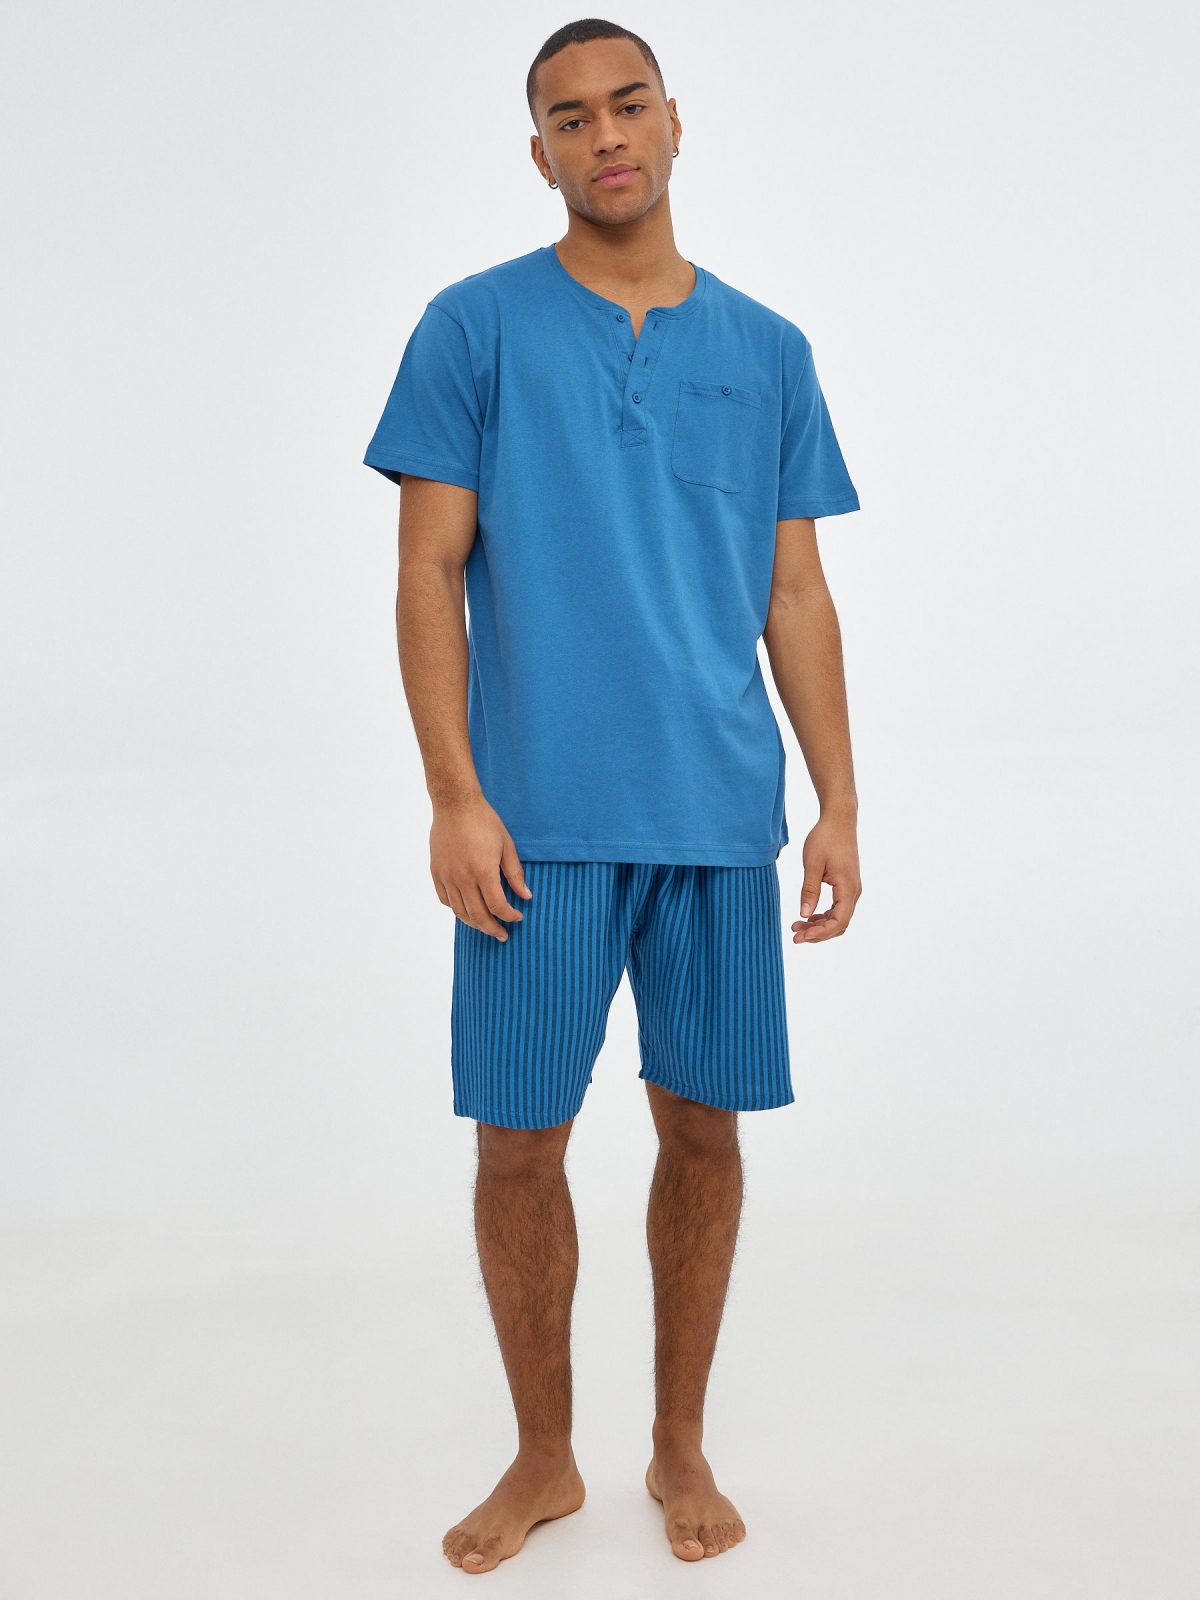 Men's pajamas striped pants blue middle front view